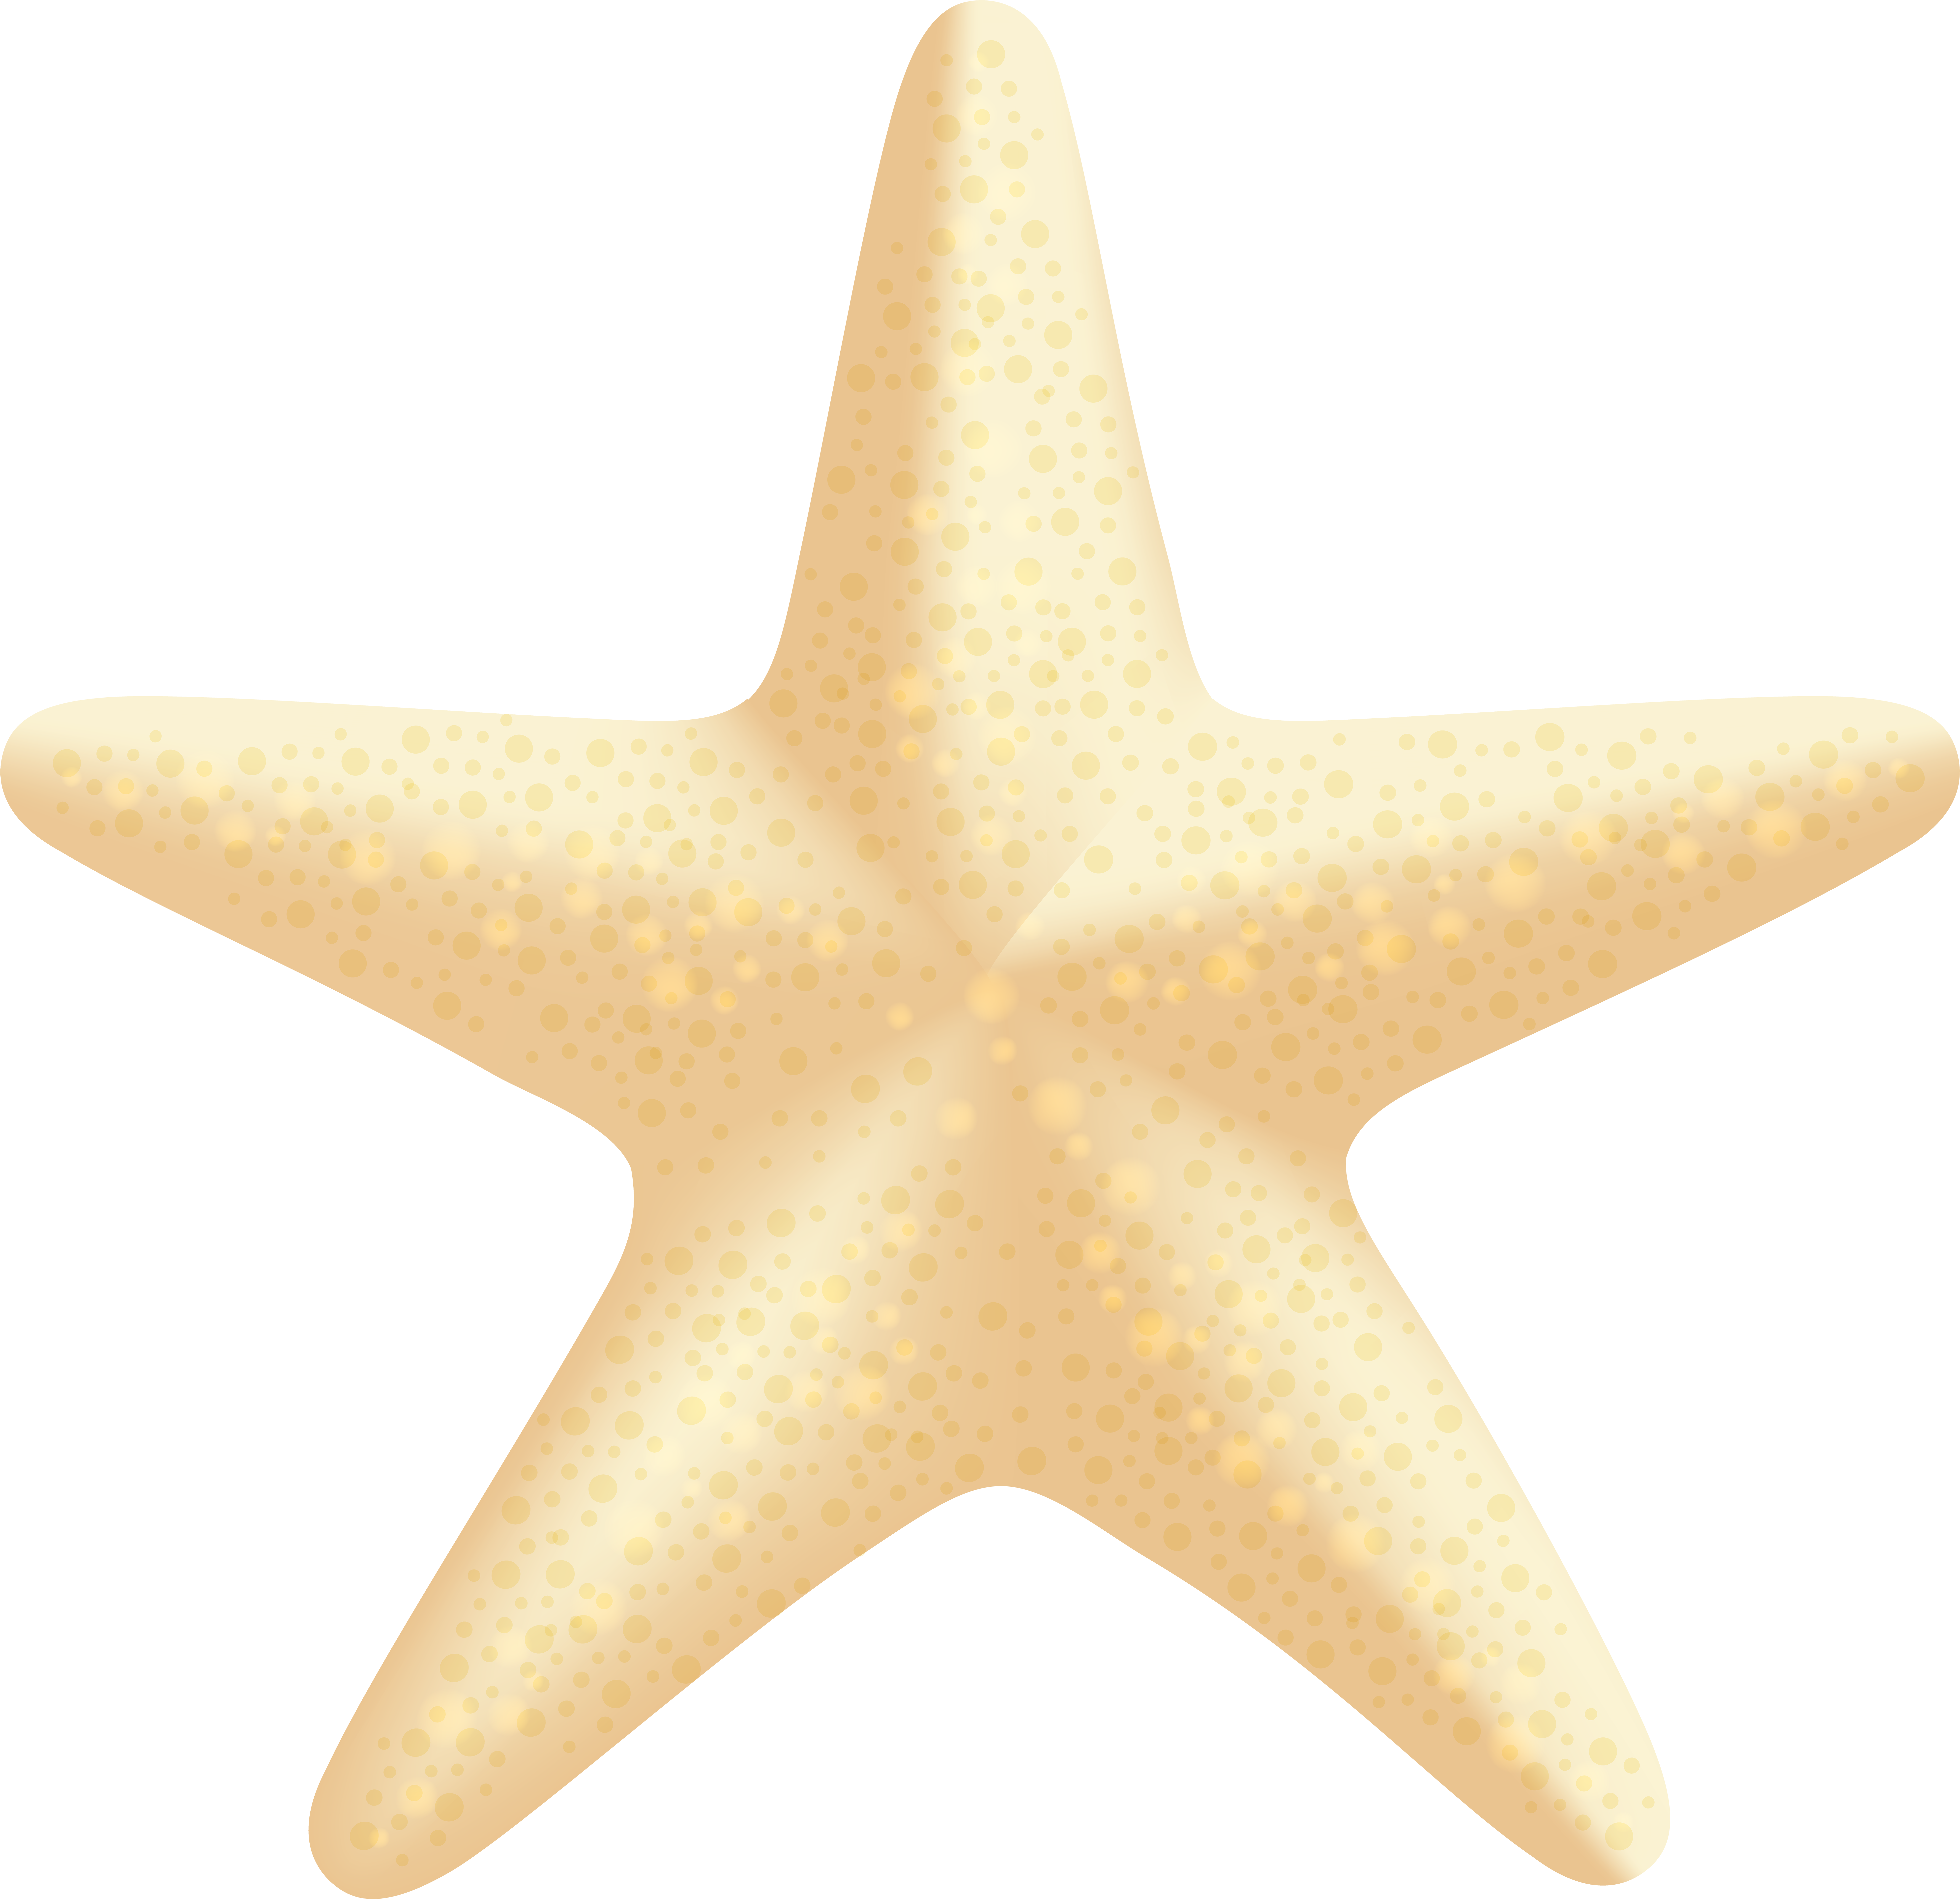 Sea Star Png Clip Art Image - Sea Star Png Clip Art Image.